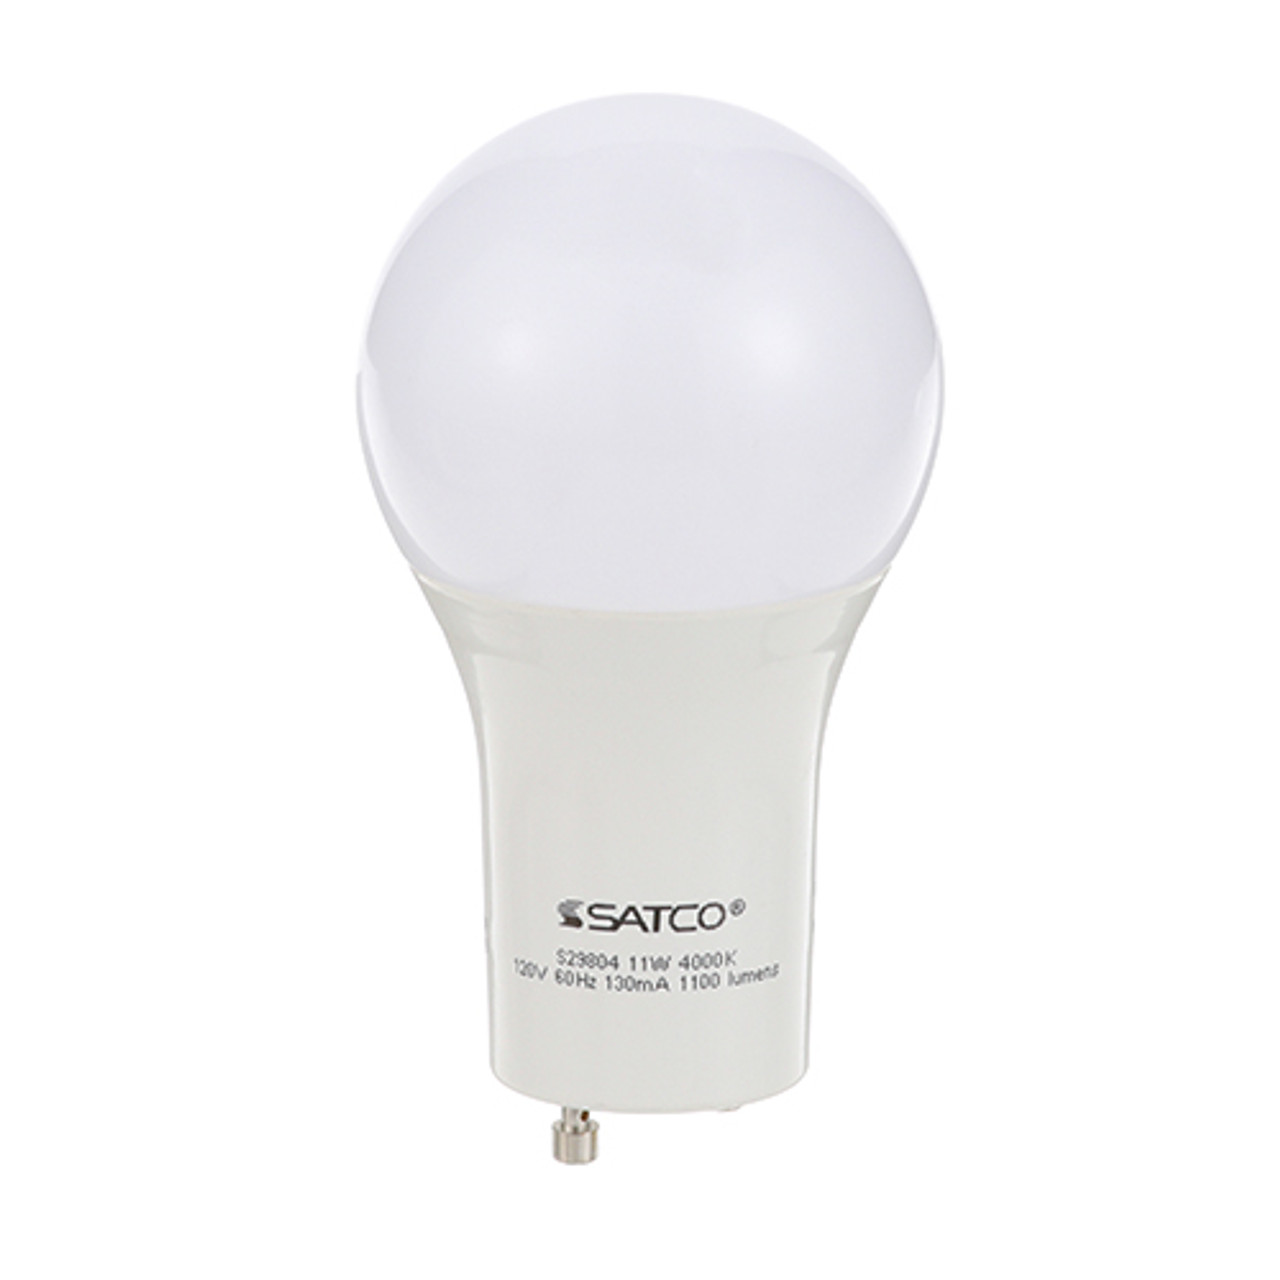 Kason® - 11802Cagu24 Bulb (Led,Gu-24, 11 Watt - Replacement Part For Kason 1802L24014